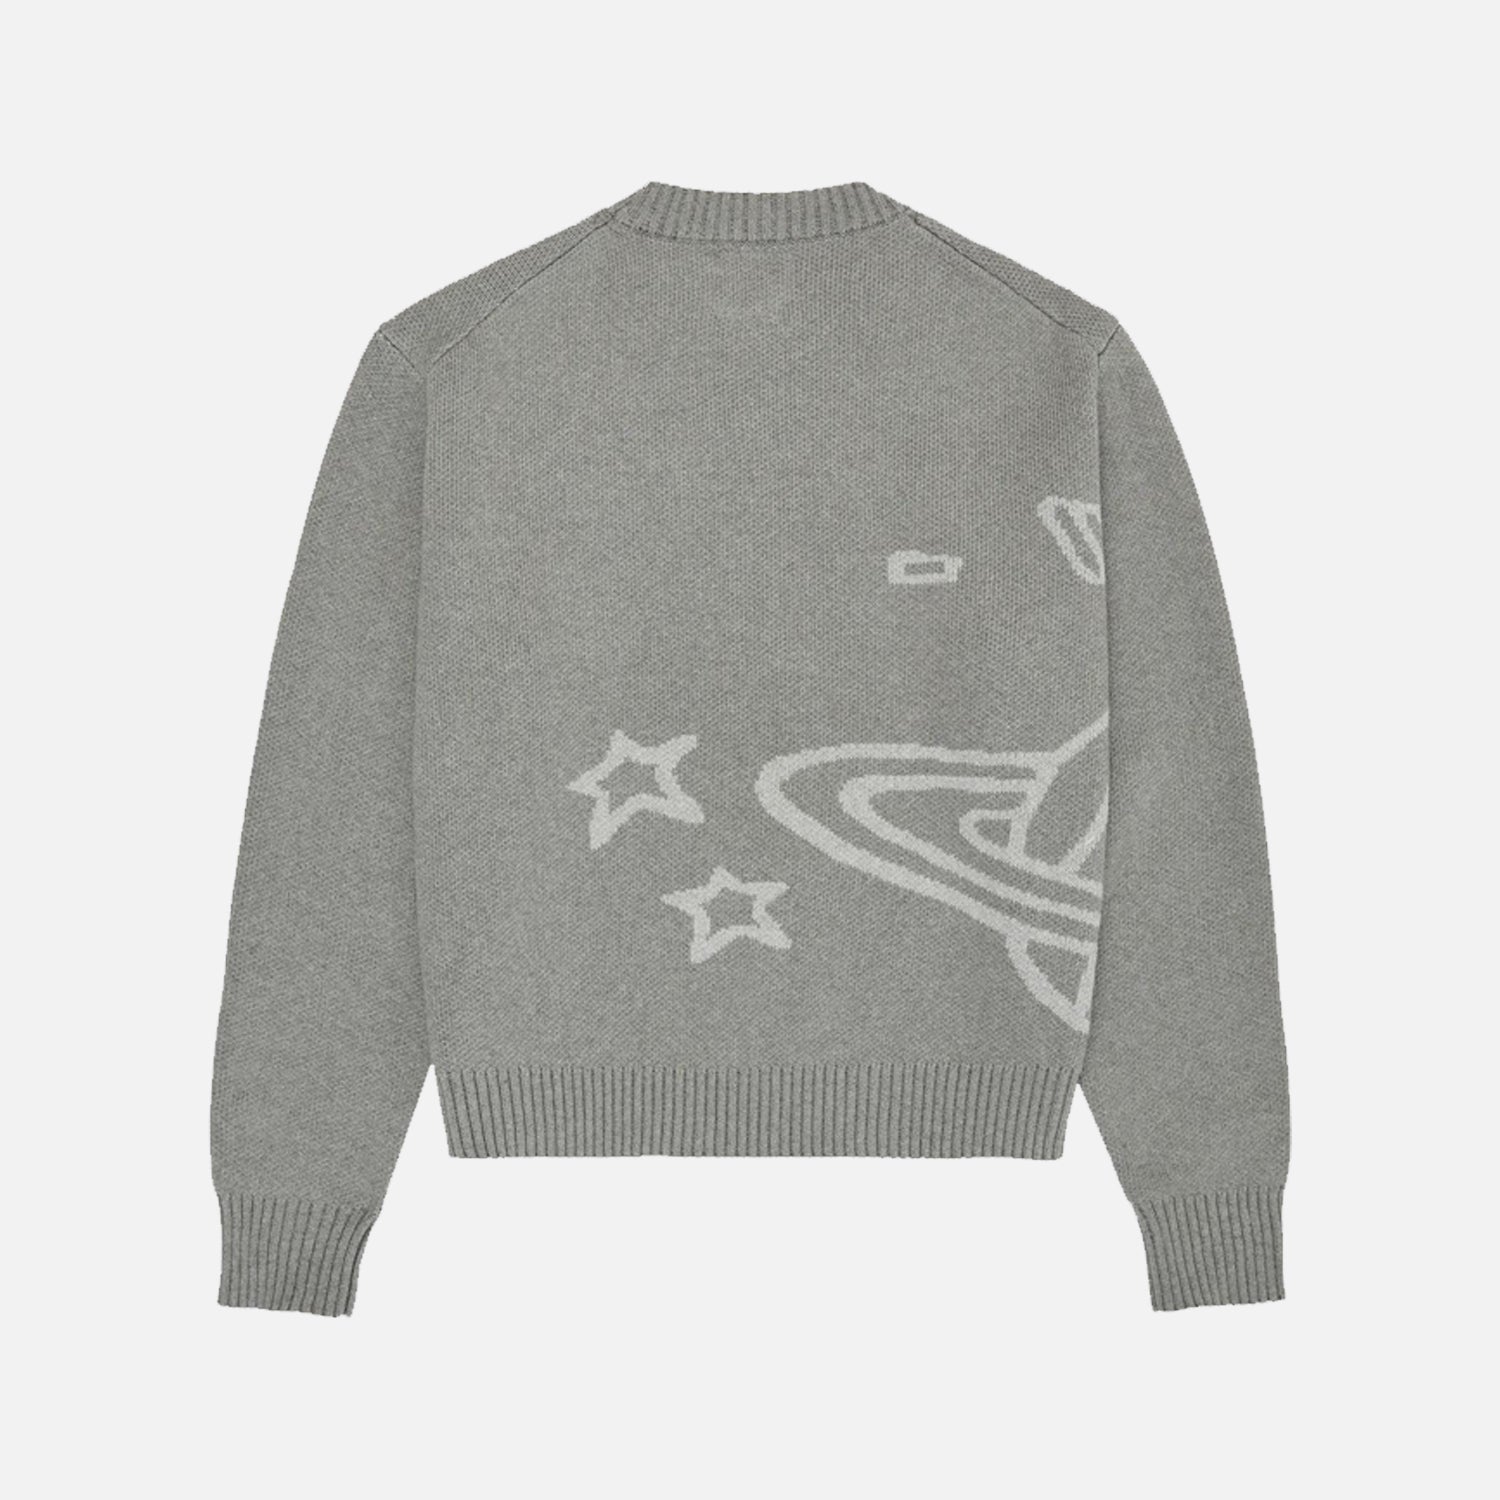 Broken Planet Market Knit Sweater - Heather Grey